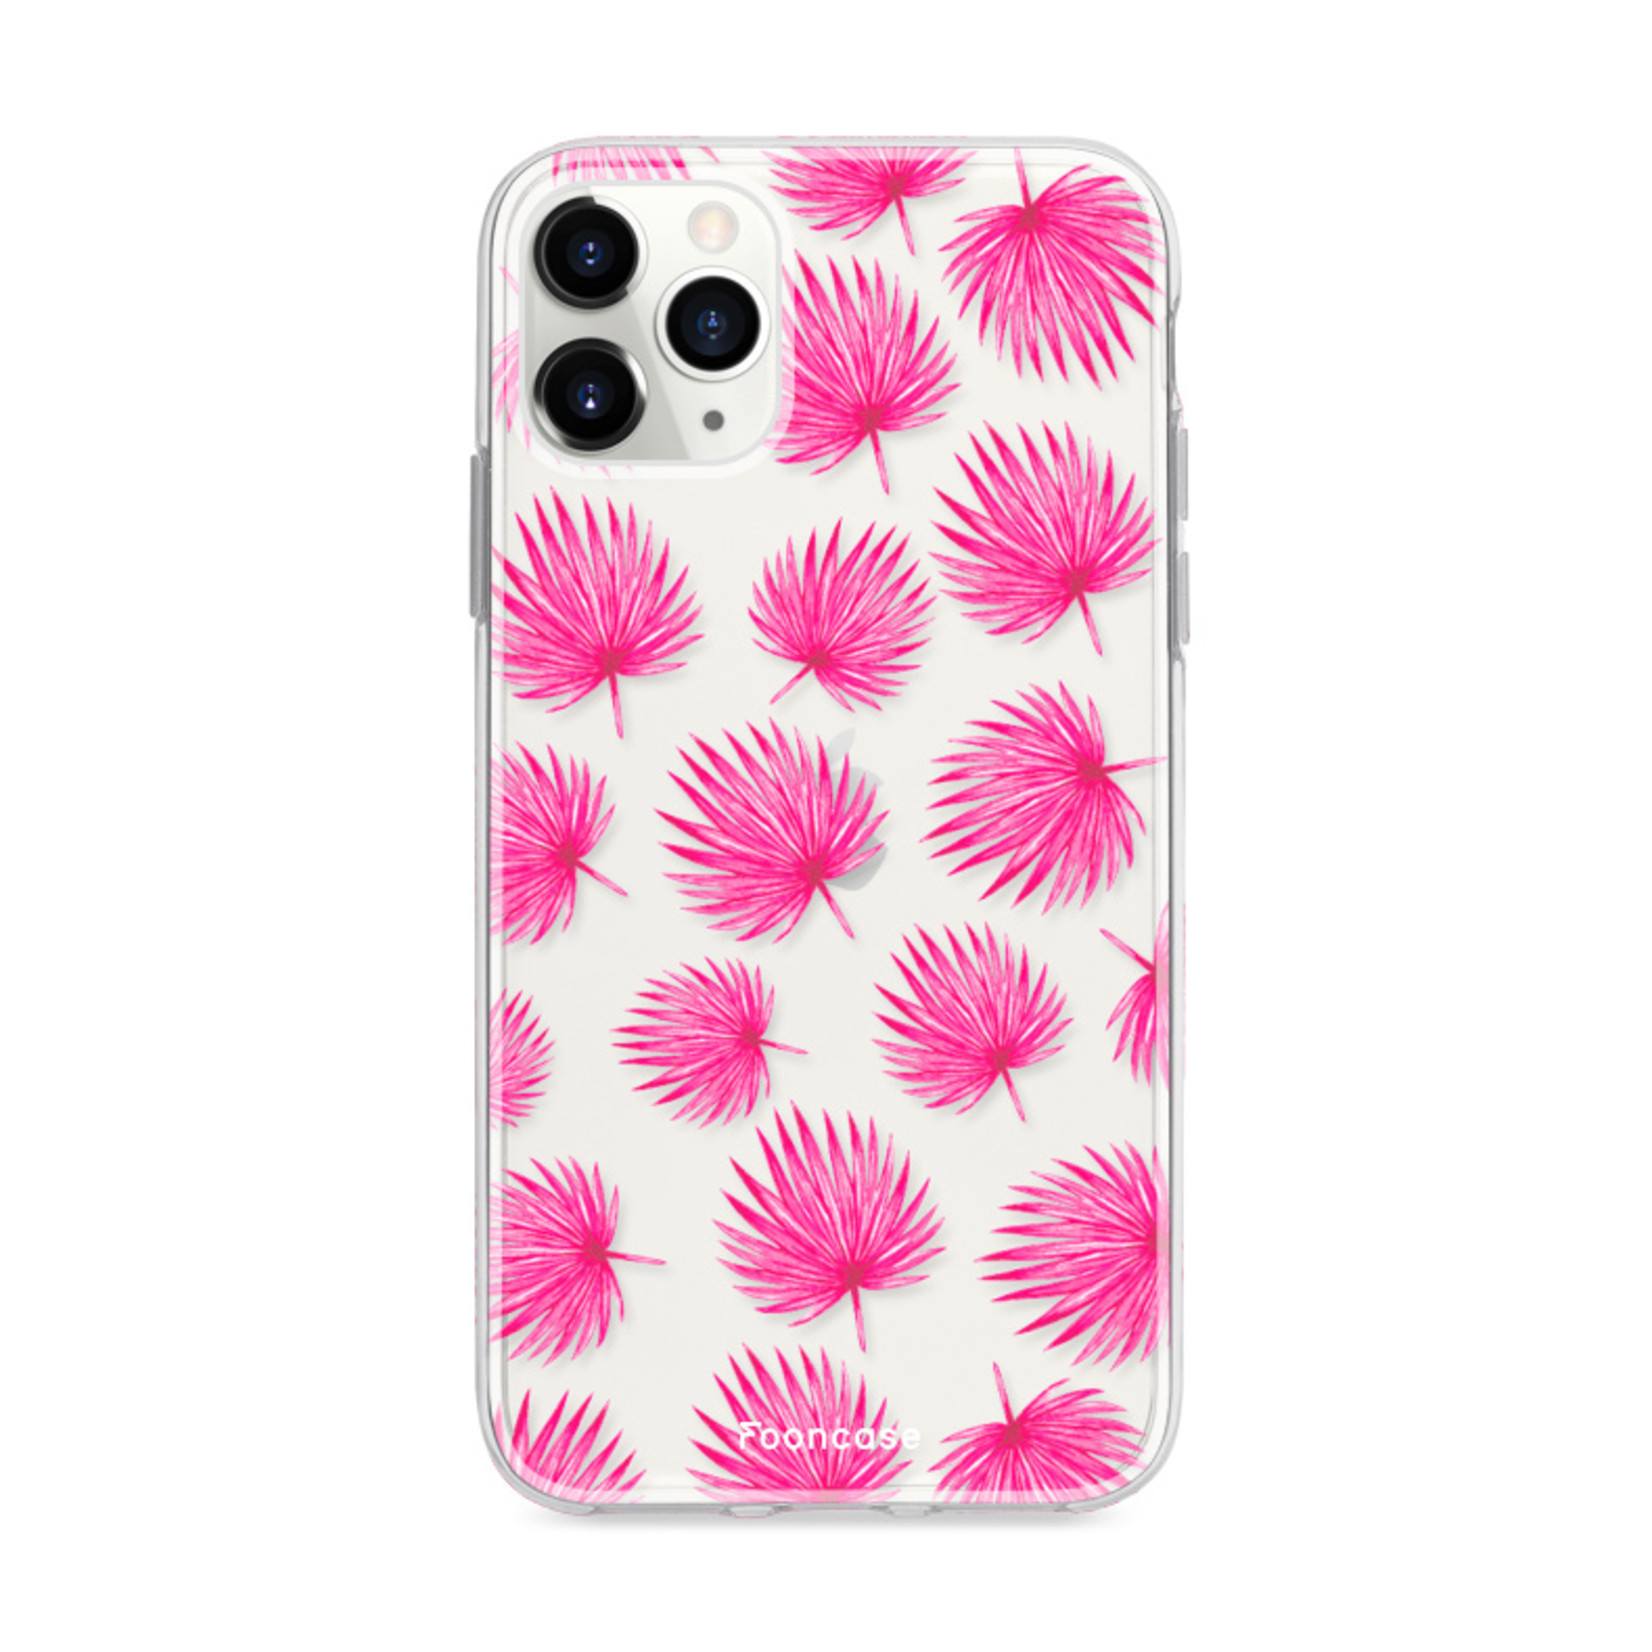 FOONCASE iPhone 12 Pro hoesje TPU Soft Case - Back Cover - Pink leaves / Roze bladeren